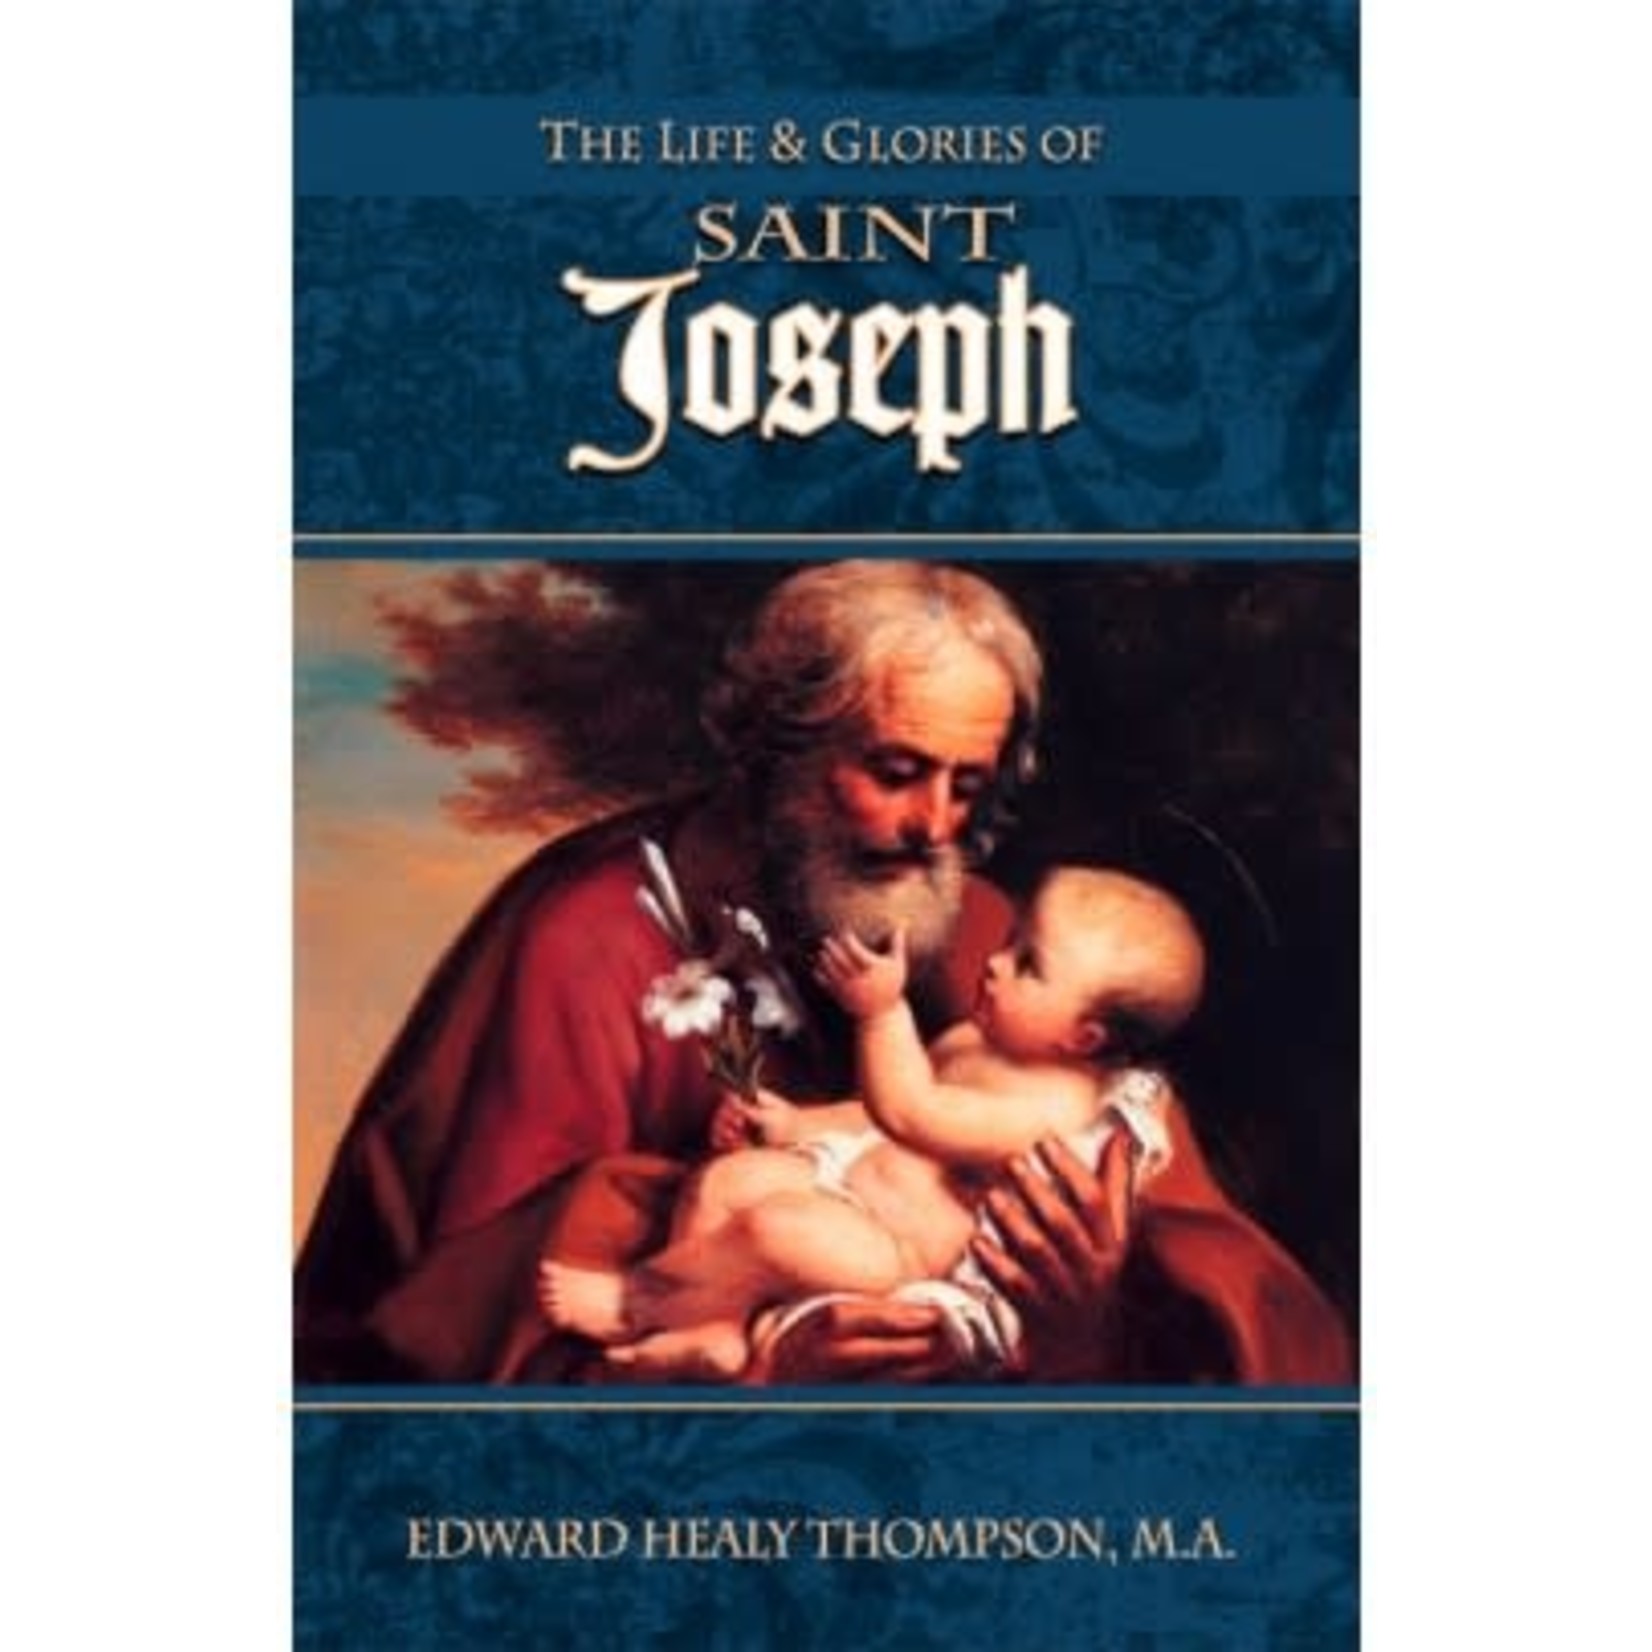 The Life & Glories of St Joseph